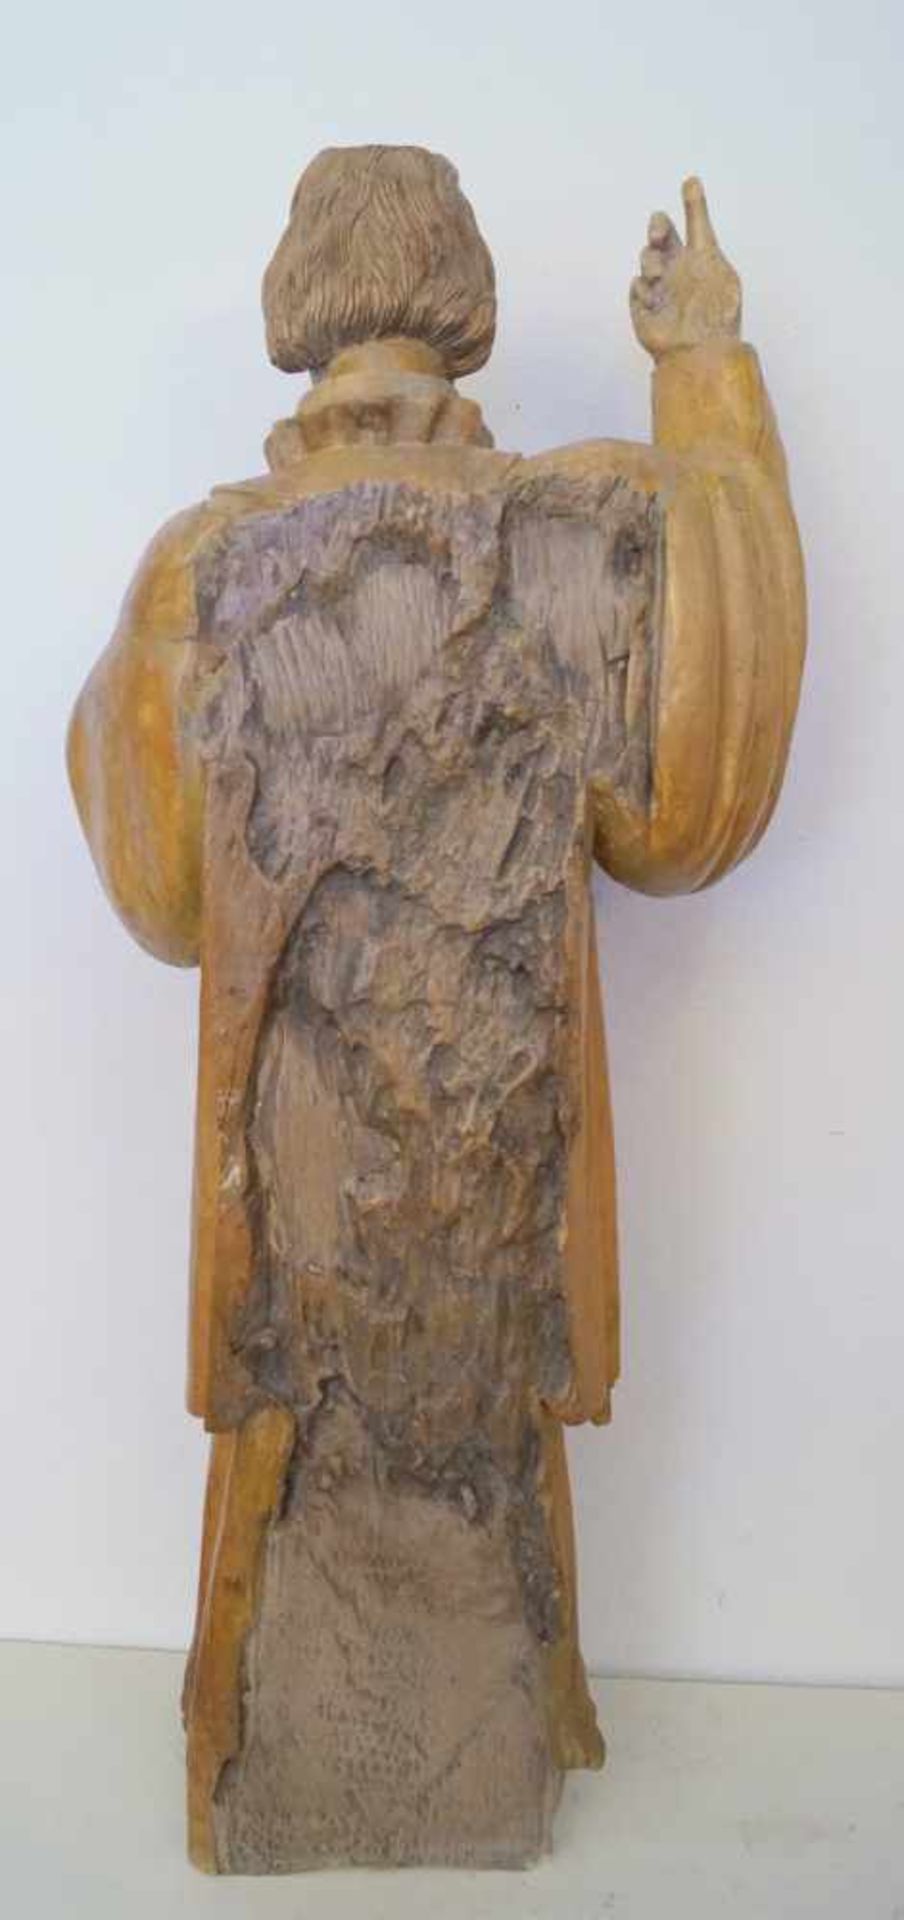 Große Petrus Statue, Eiche, geschnitztEiche geschnitzt, Verso gehöhlt, Oberfläche behandelt, 1 - Image 2 of 2